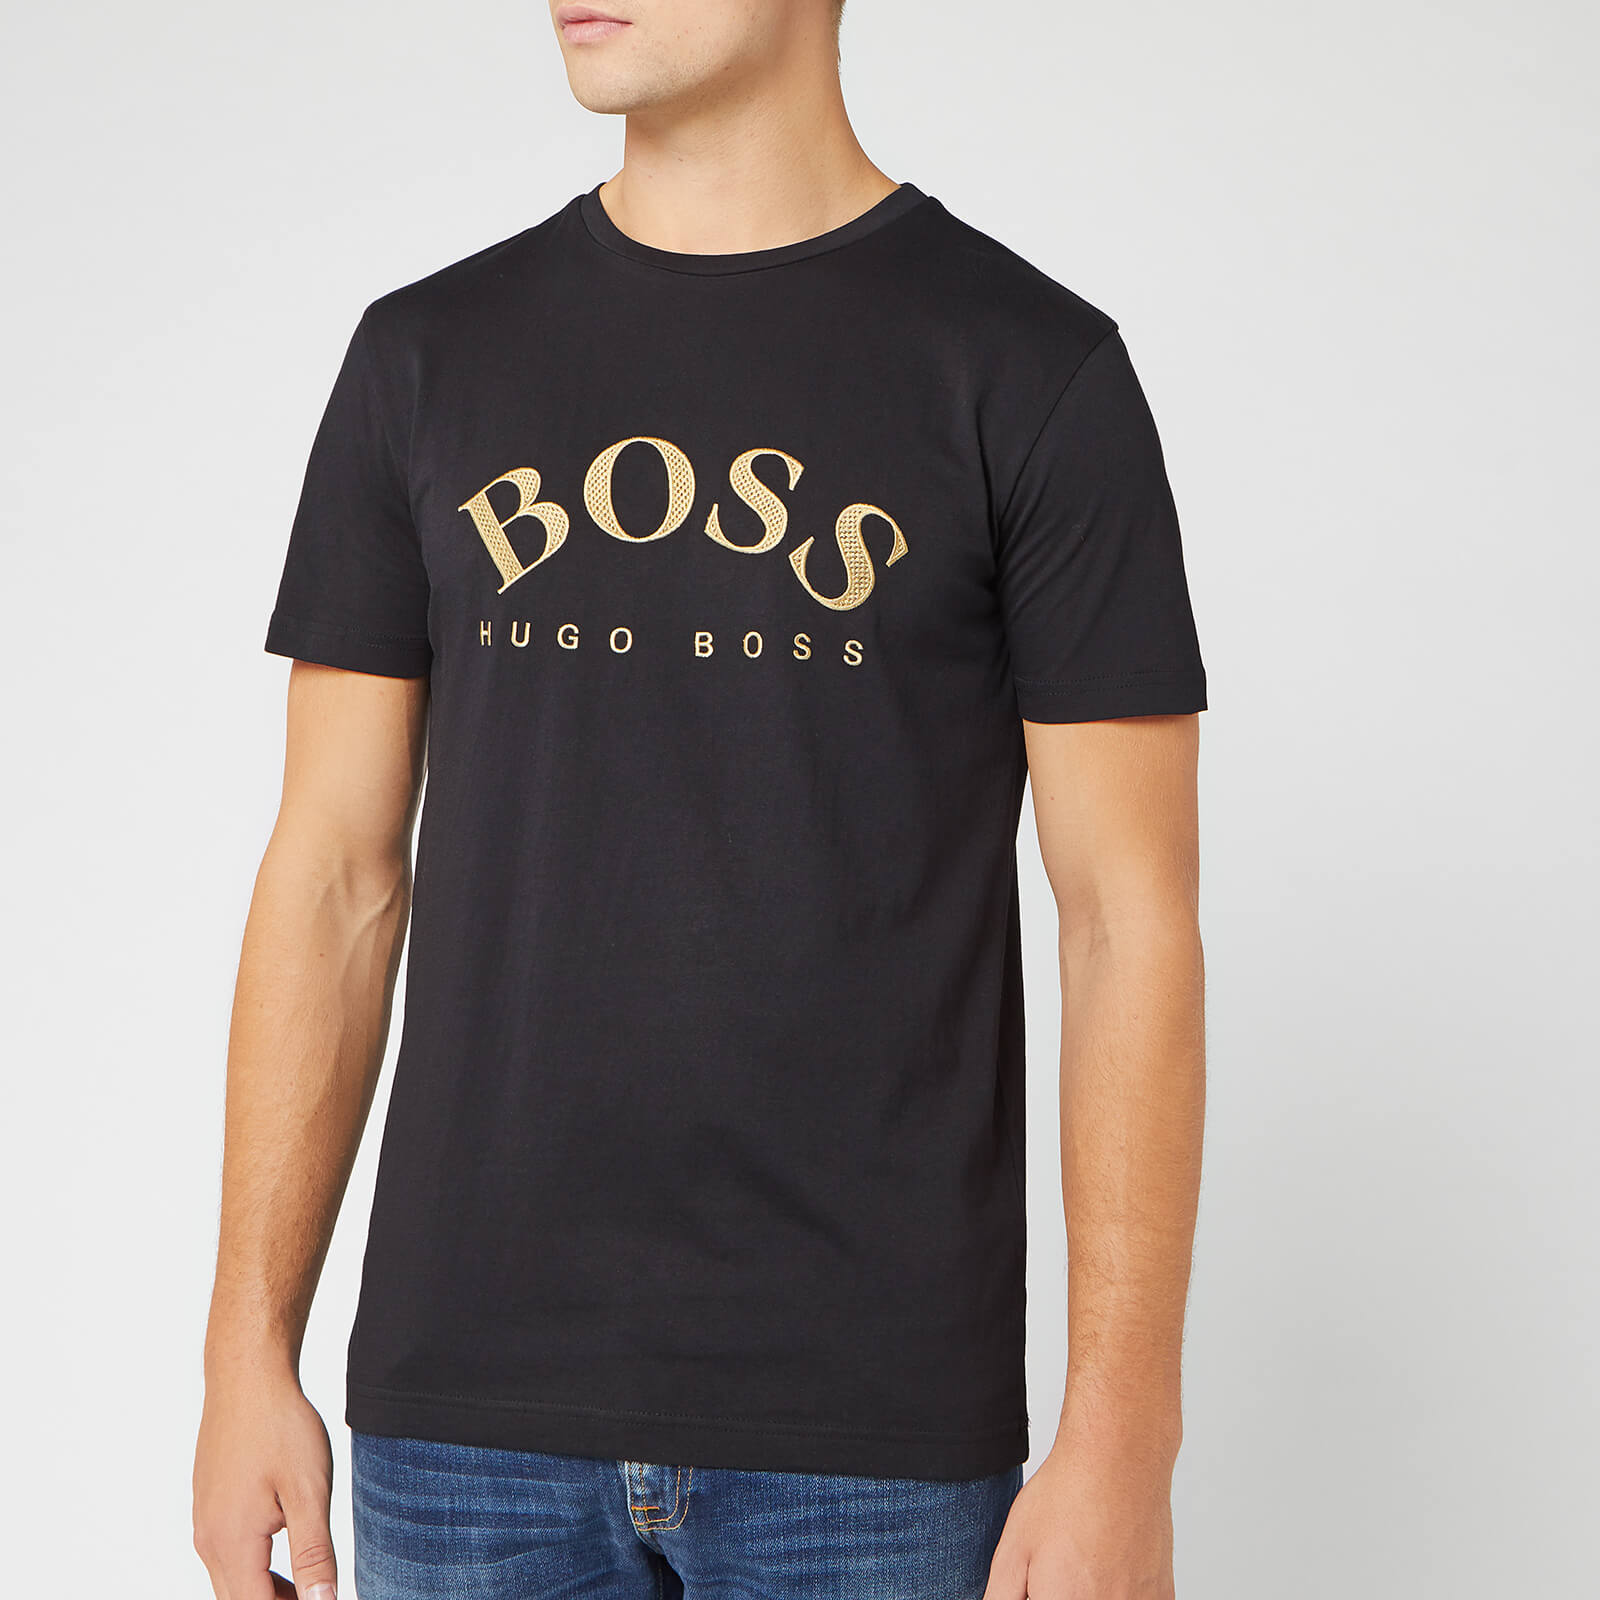 hugo boss t shirt black and gold